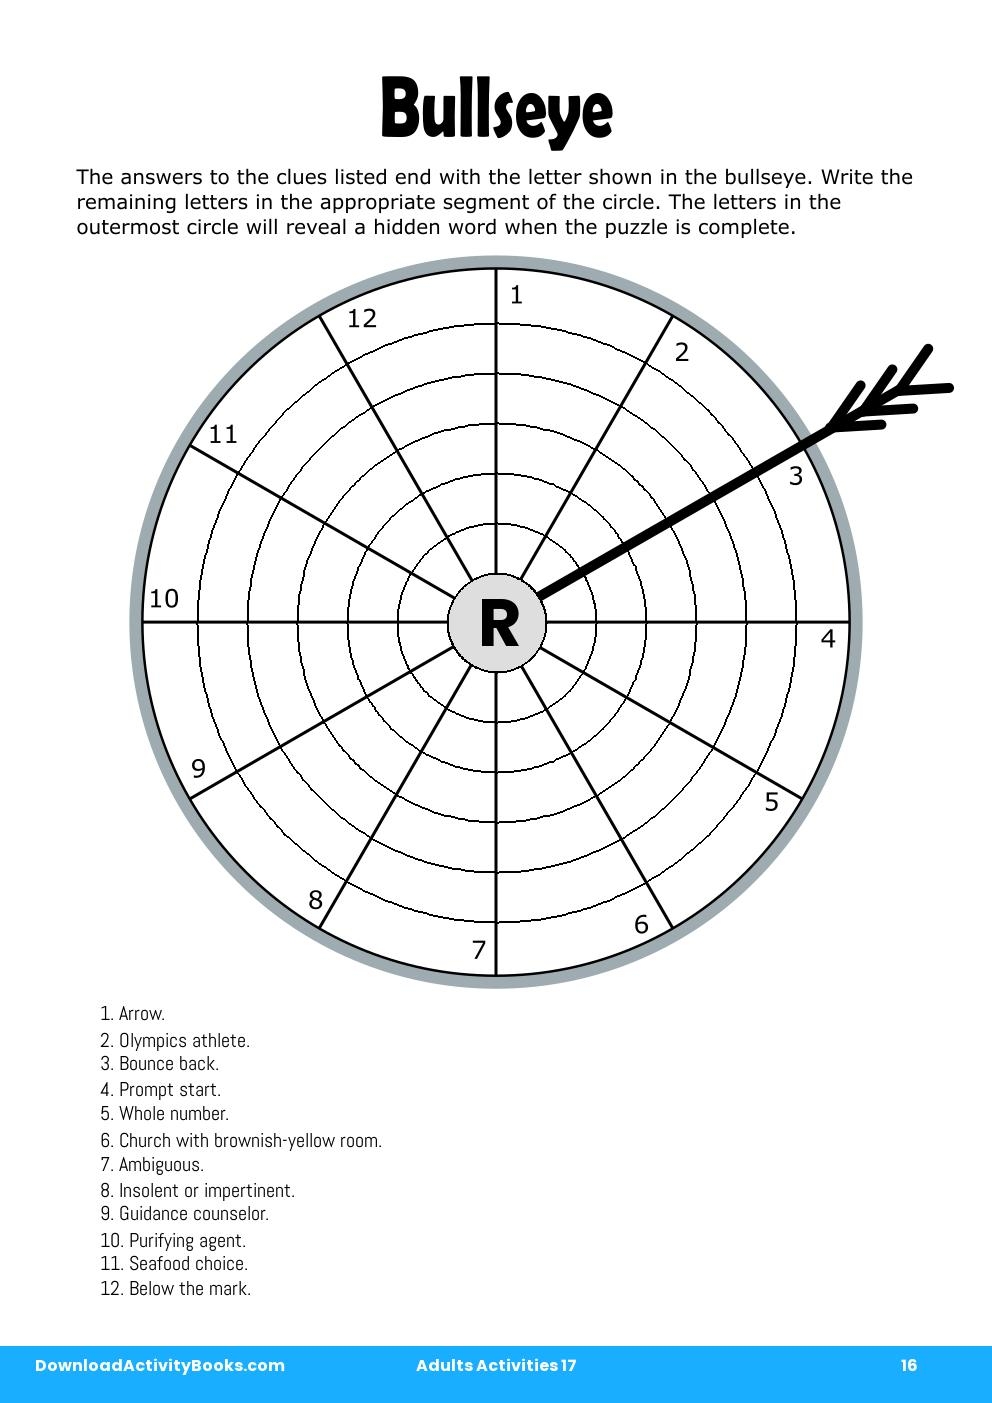 Bullseye in Adults Activities 17